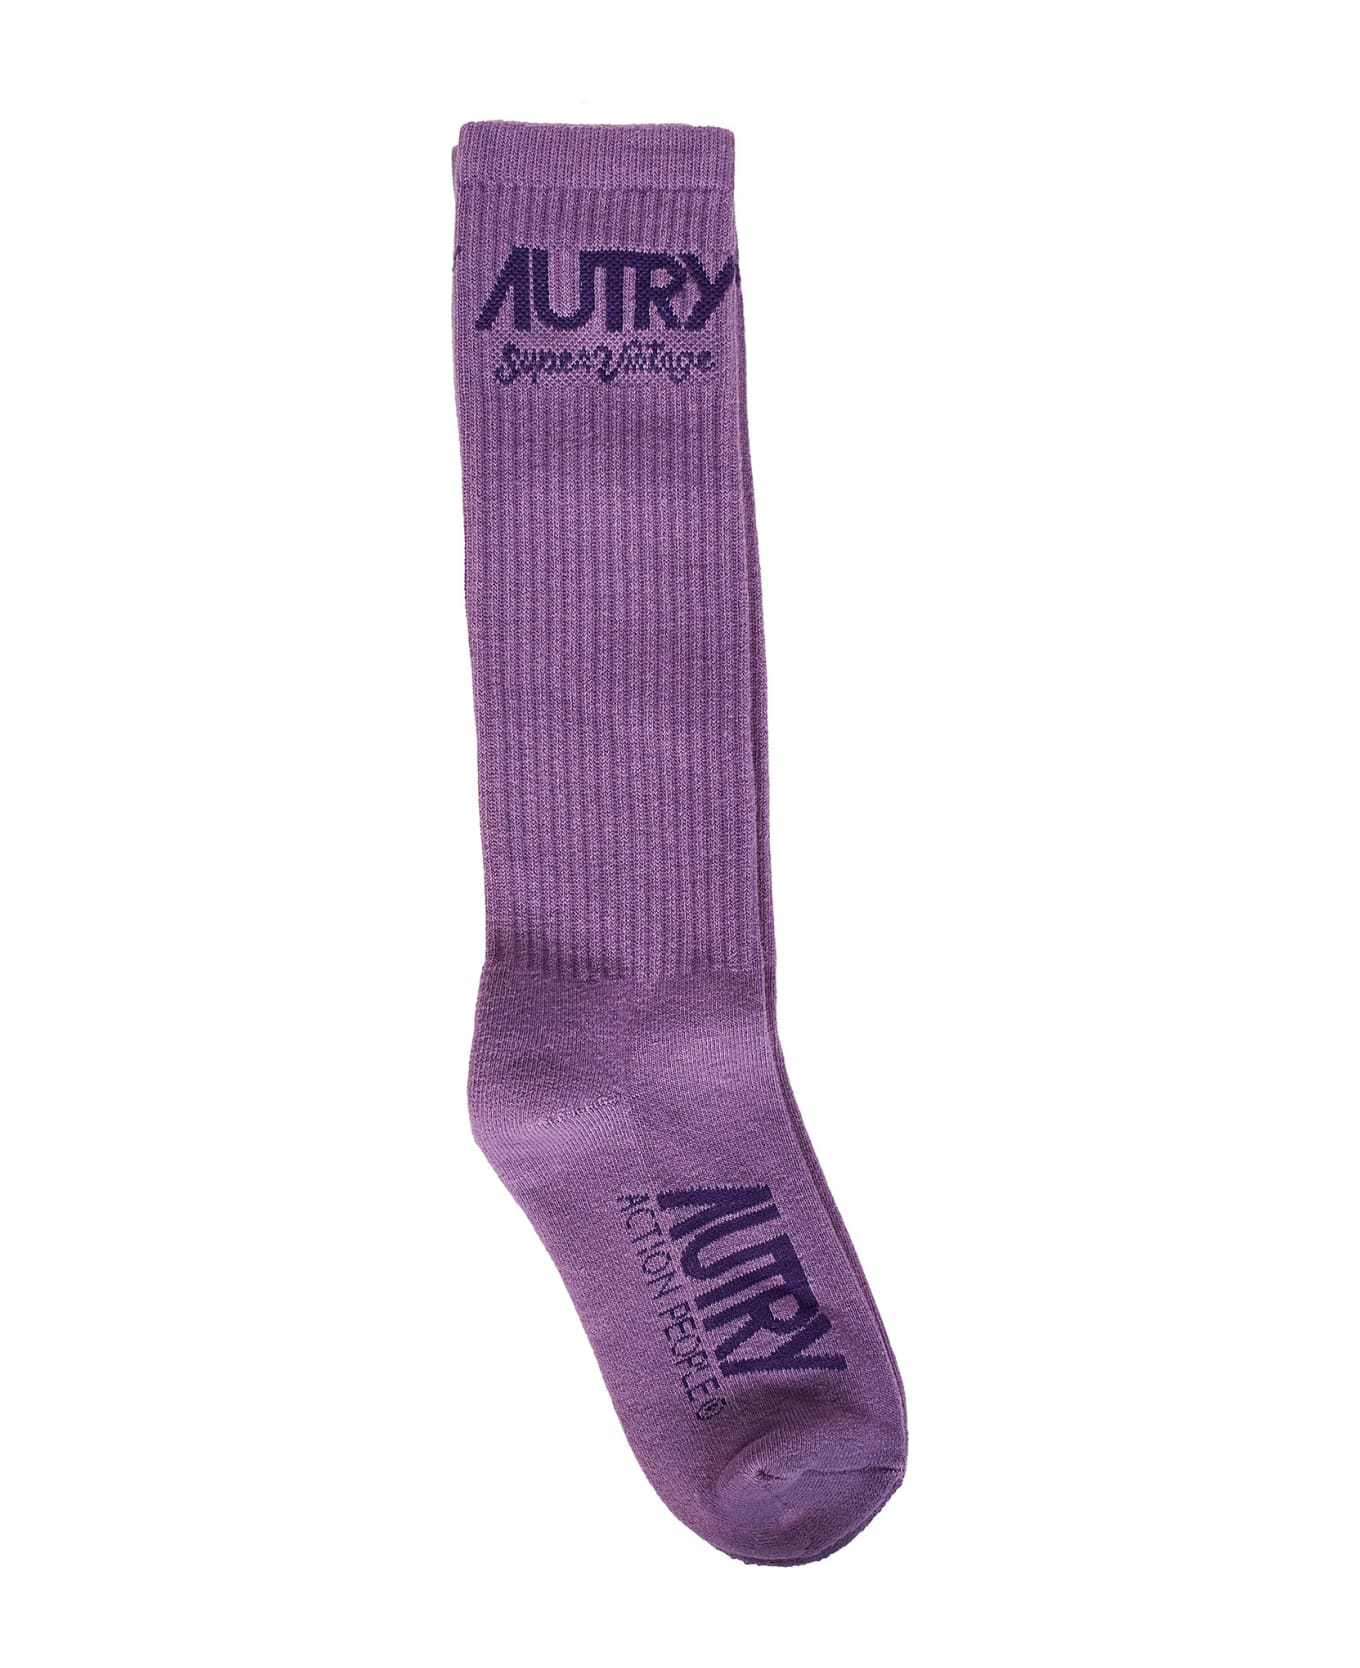 Autry Supervintage Socks - Lilac